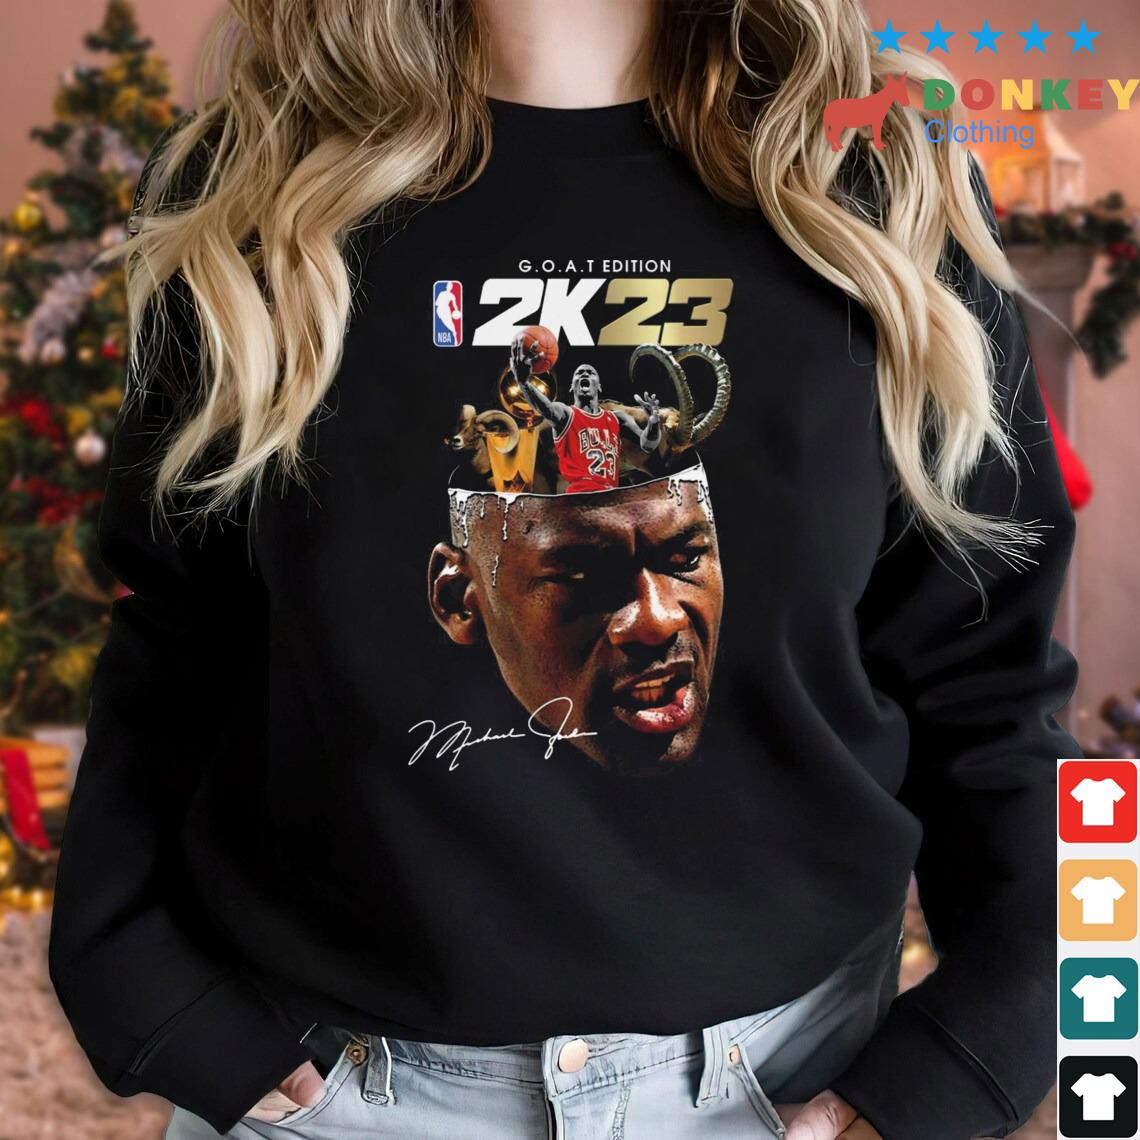 Michael Jordan Chicago Bulls Goat Edition 2k23 Signature Shirt